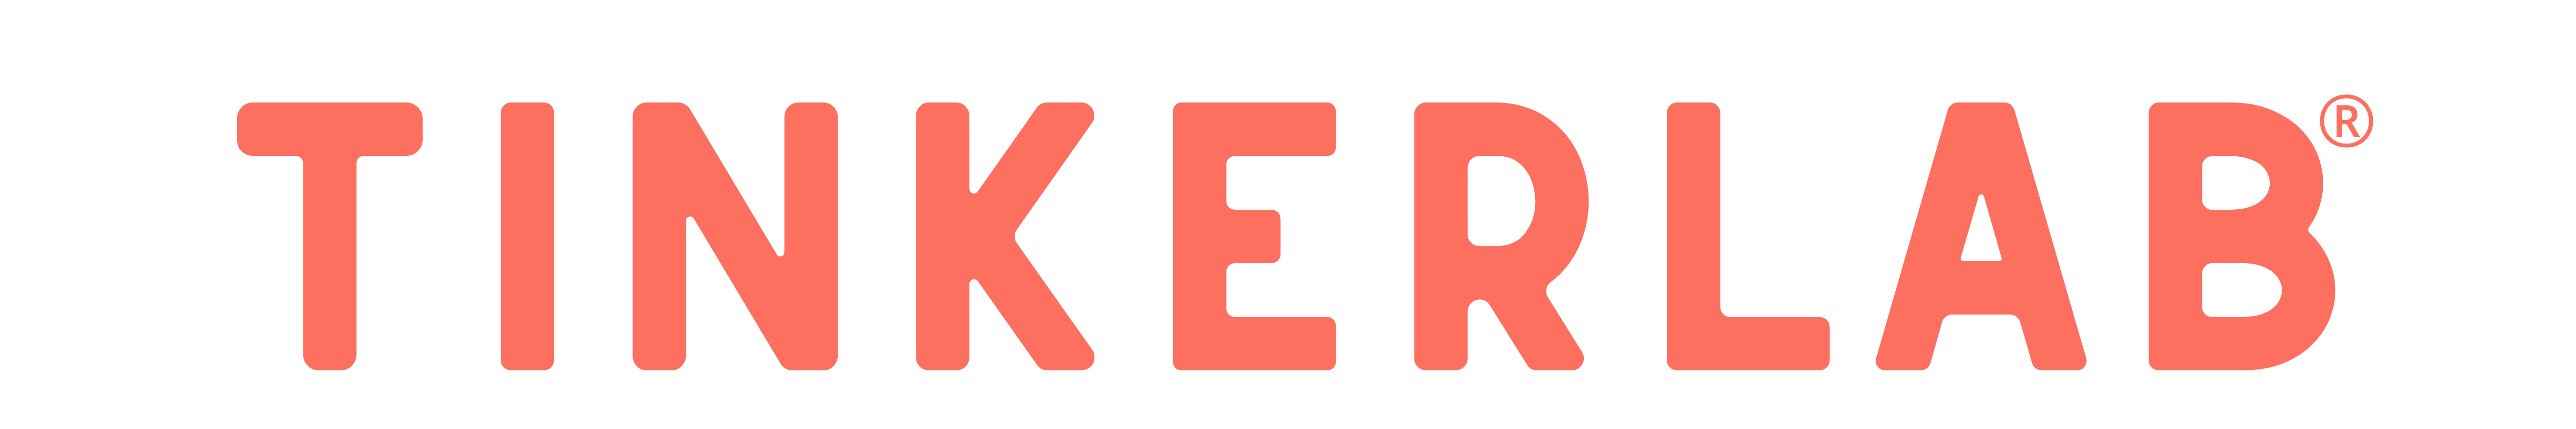 tinkerlab logo 8